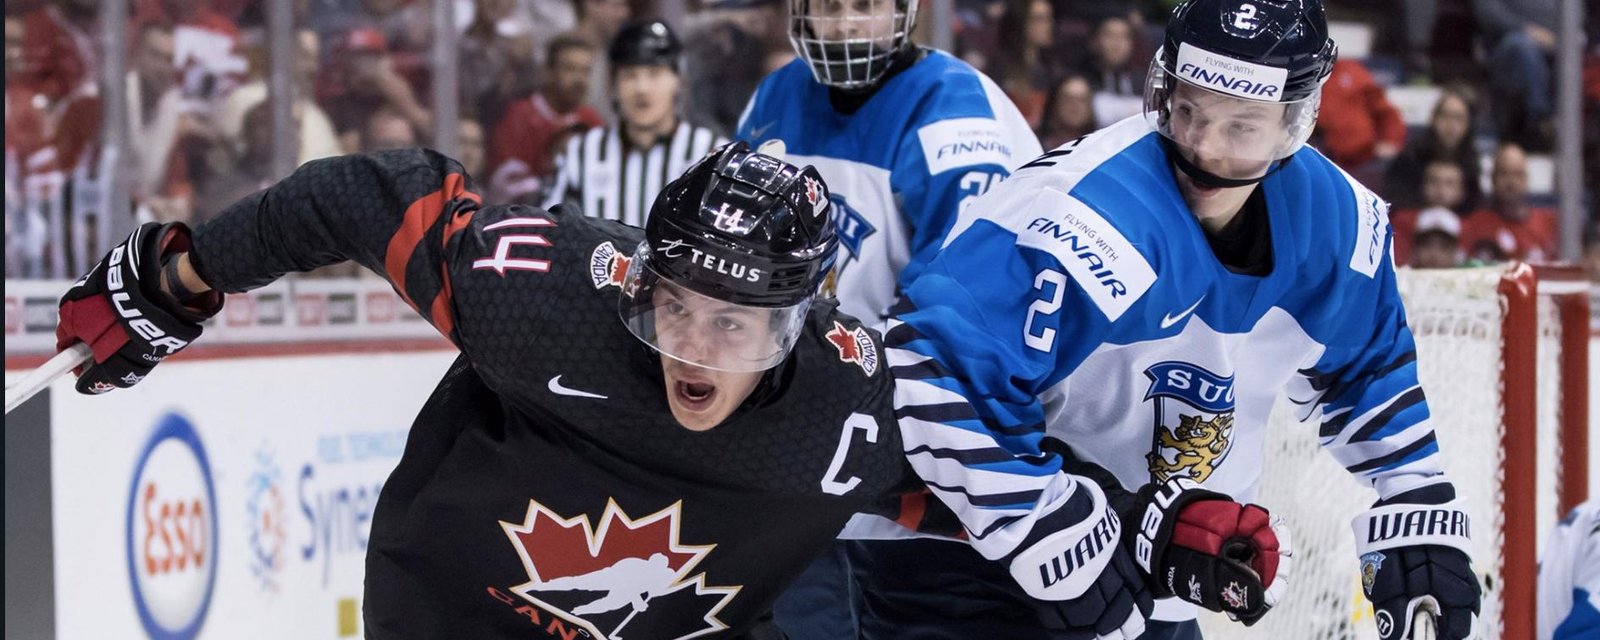 Finland ties Canada in last minute with freak goal!